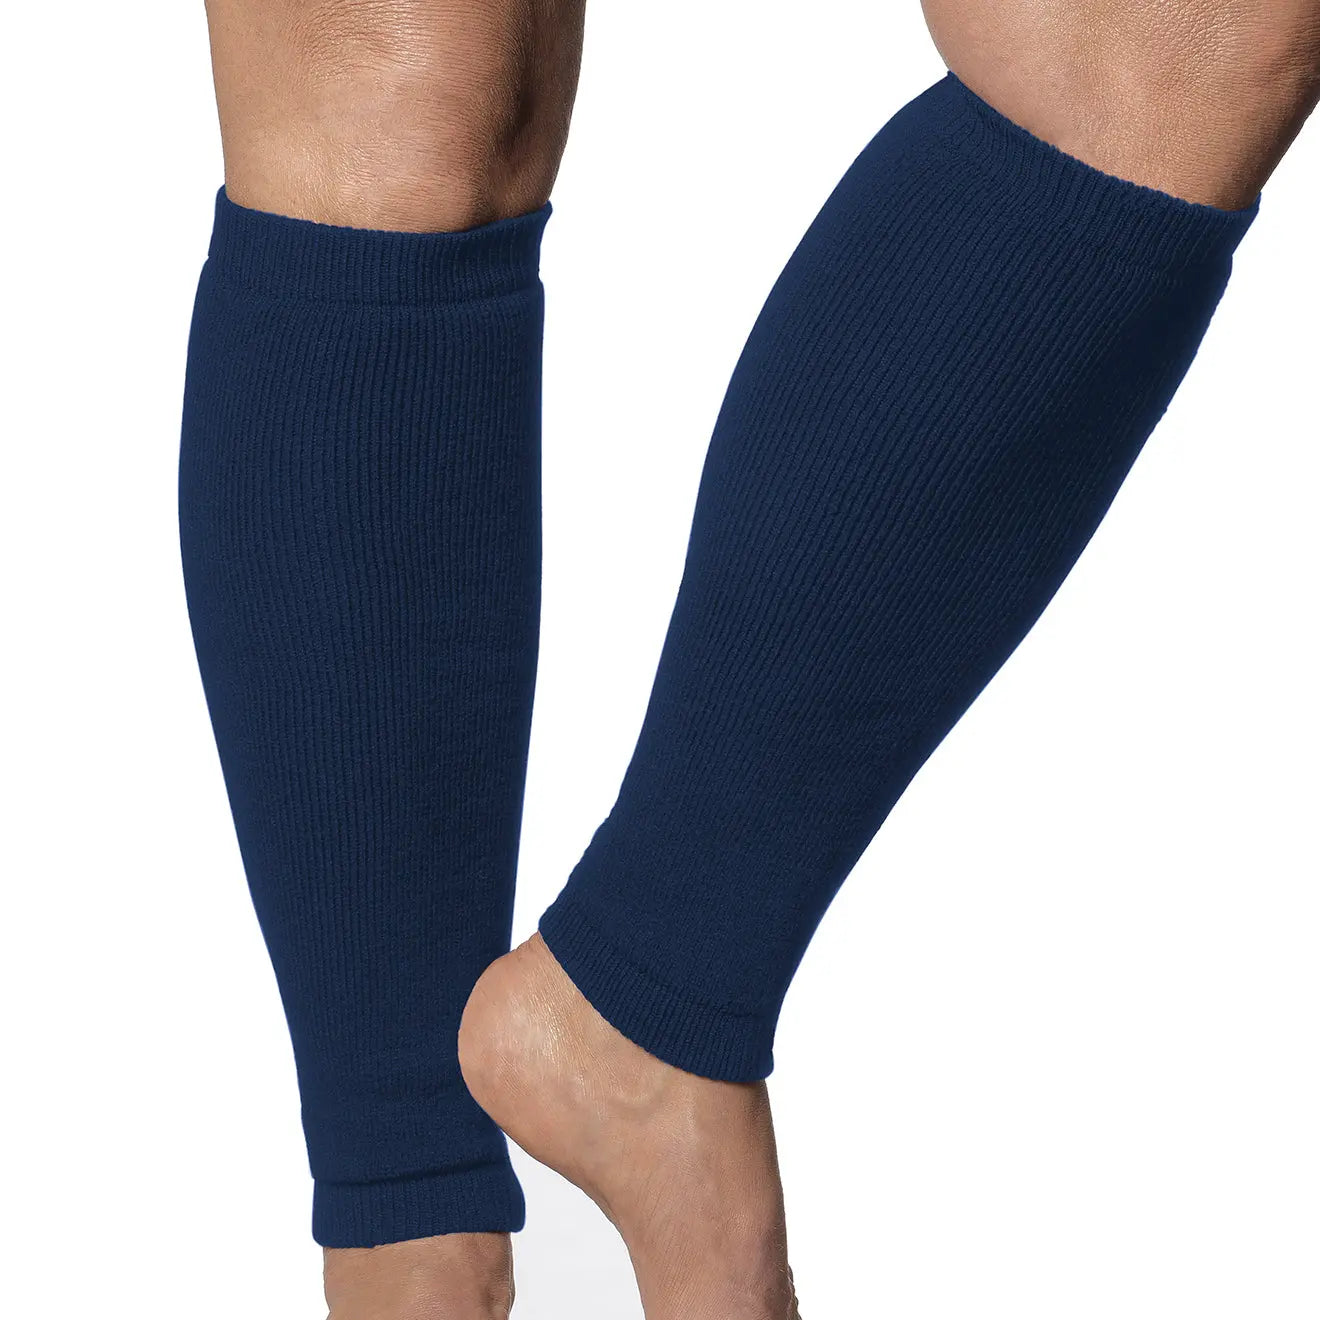 Leg Sleeves - Light Weight. Frail Skin Protectors. Navy Blue